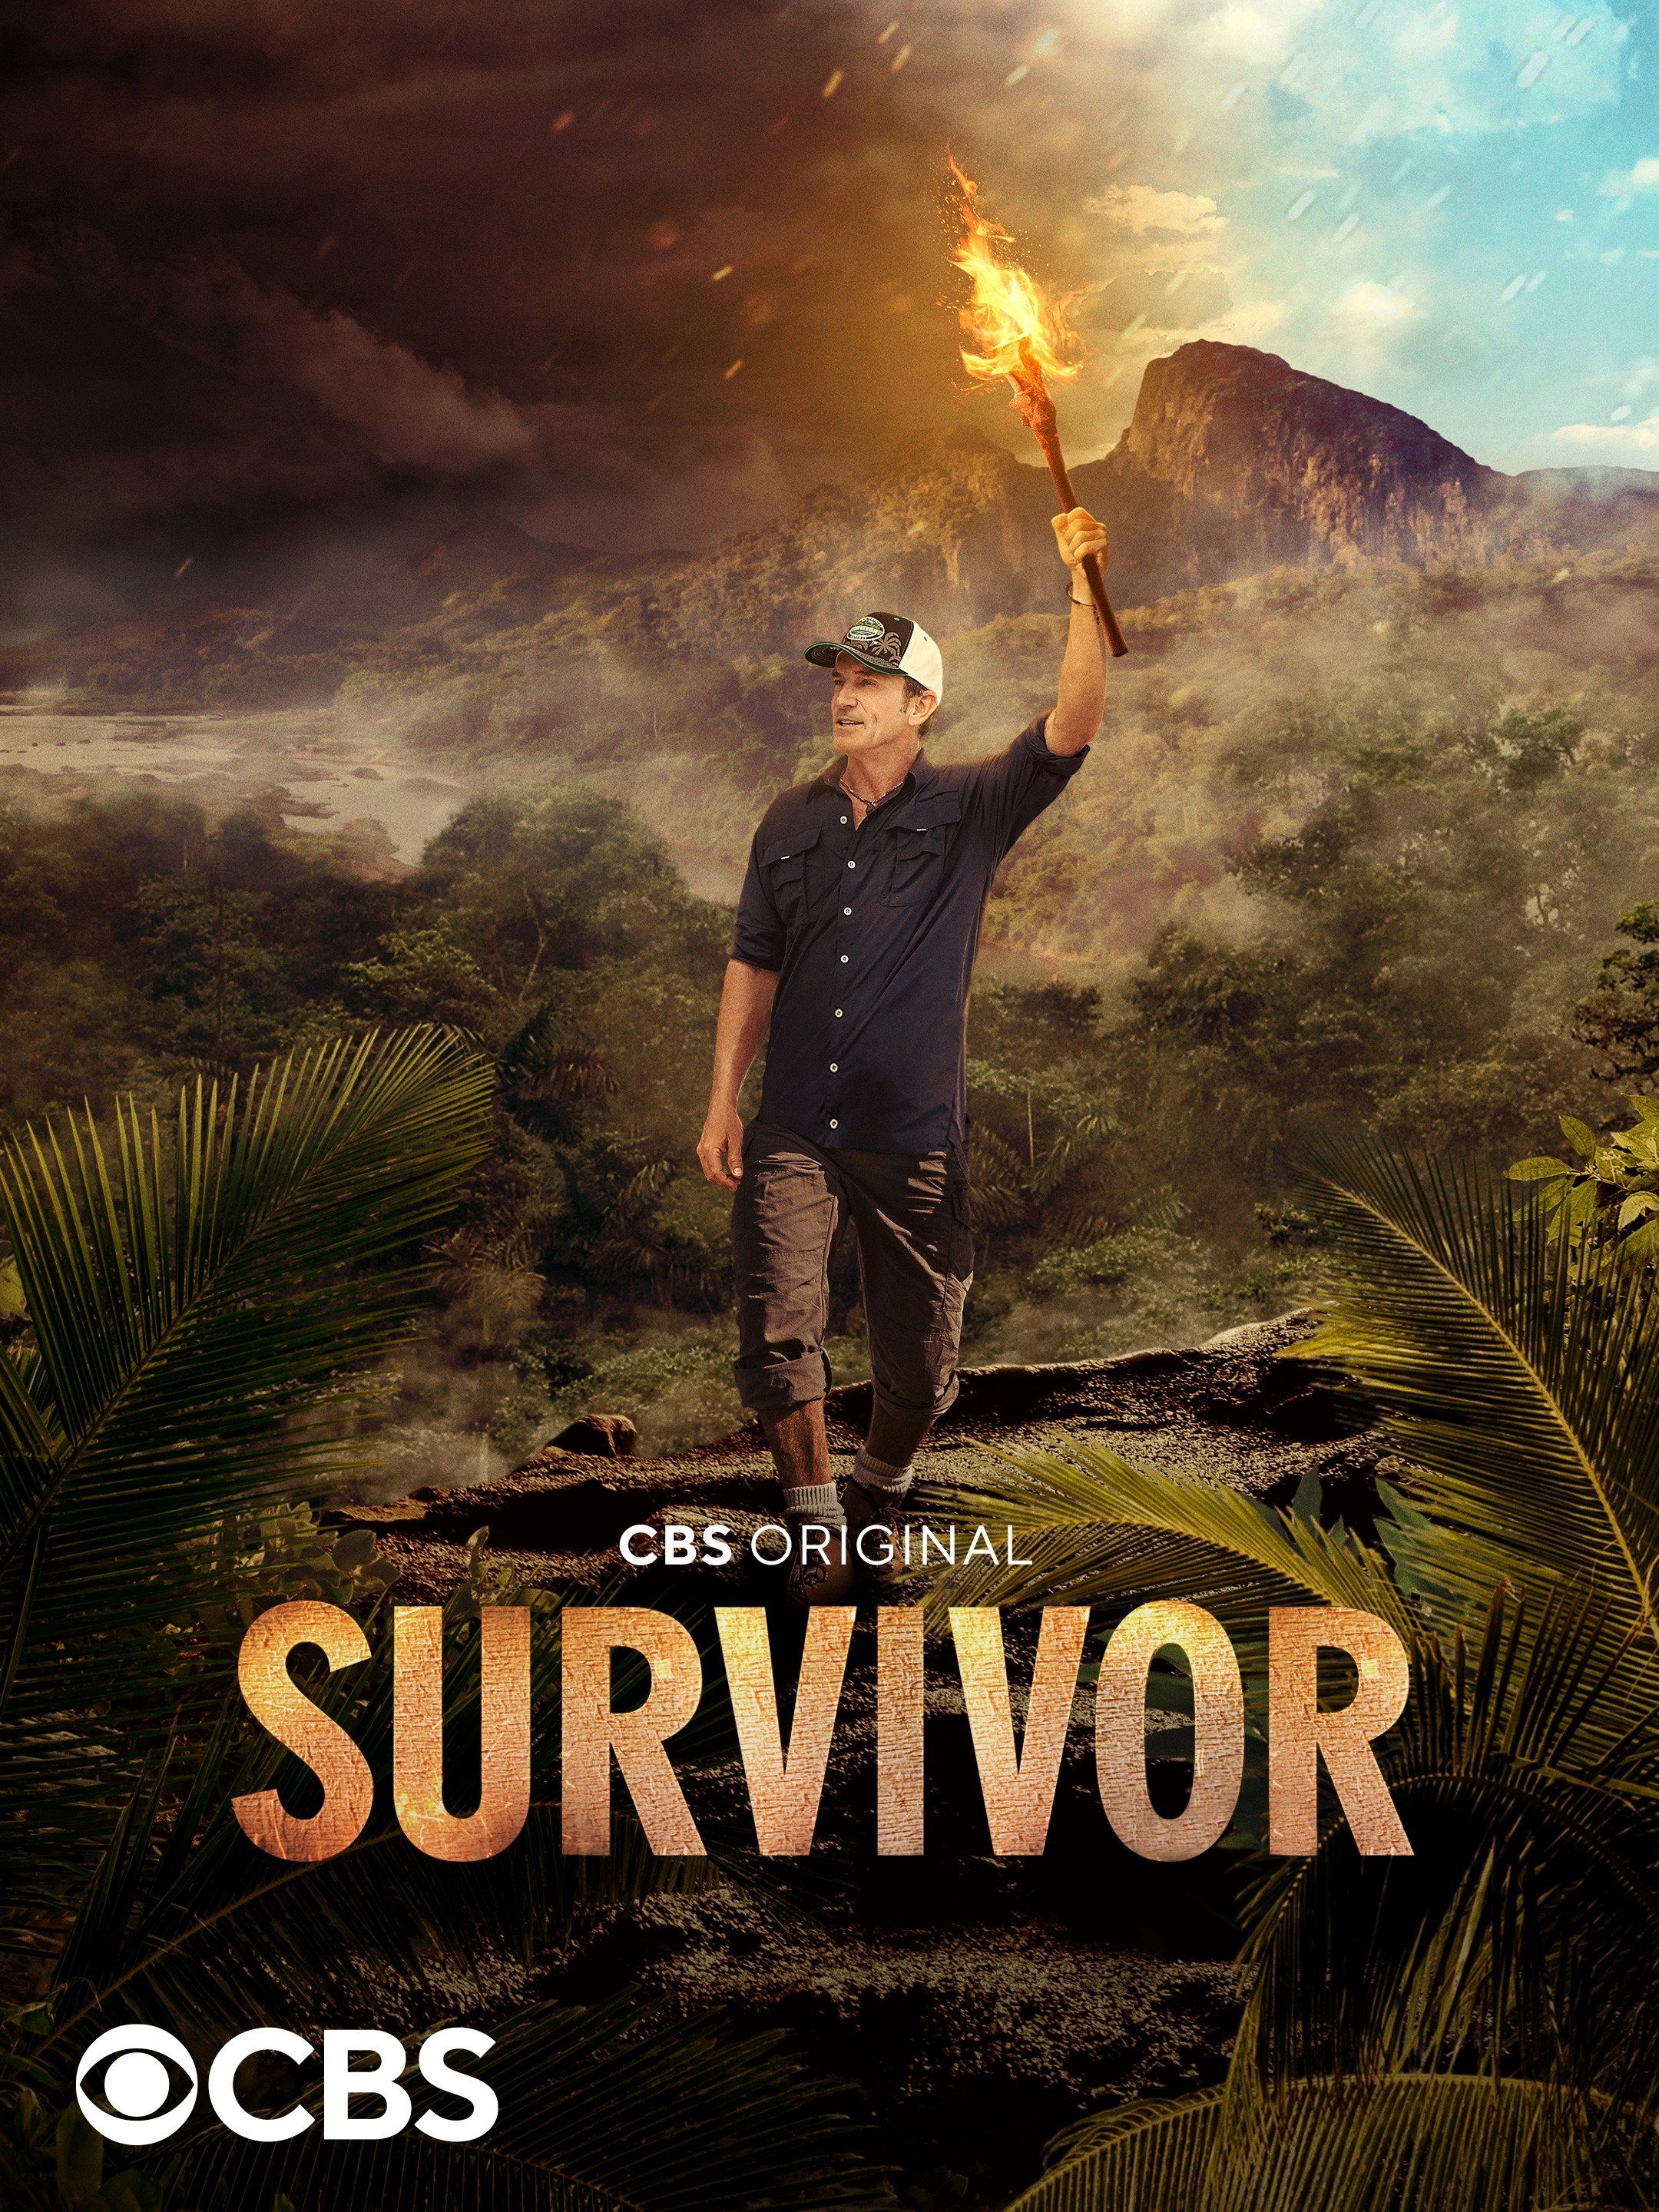 Survivor' season 44 on CBS will include a yogi from metro Phoenix